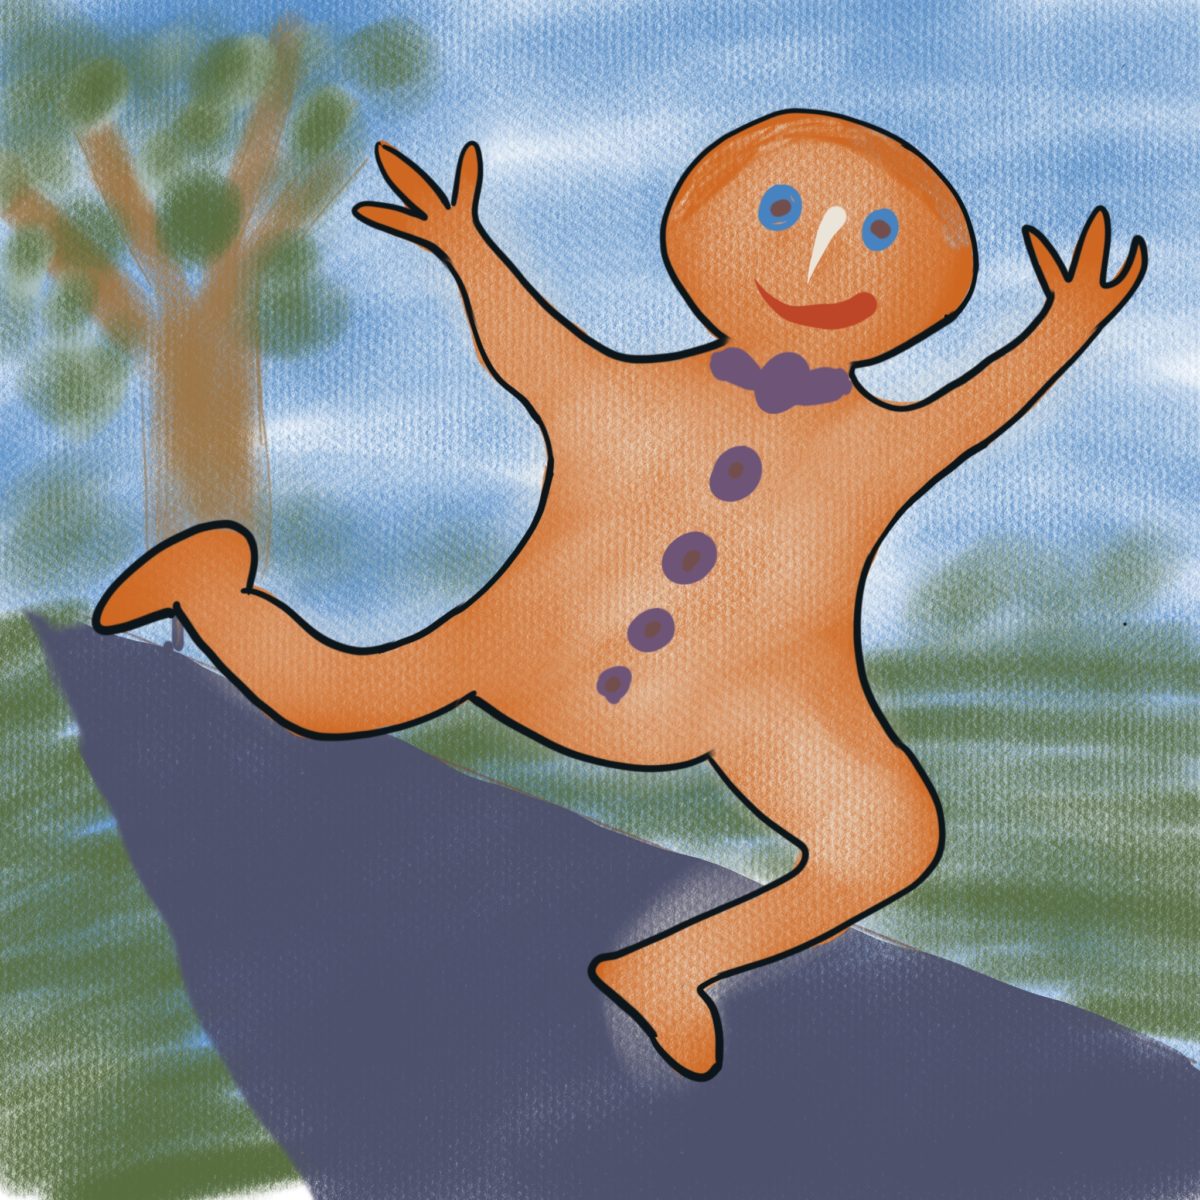 The Gingerbread Man - Small Stories Audiobooks - Free Audio Books | Knigi-Audio.com/en/